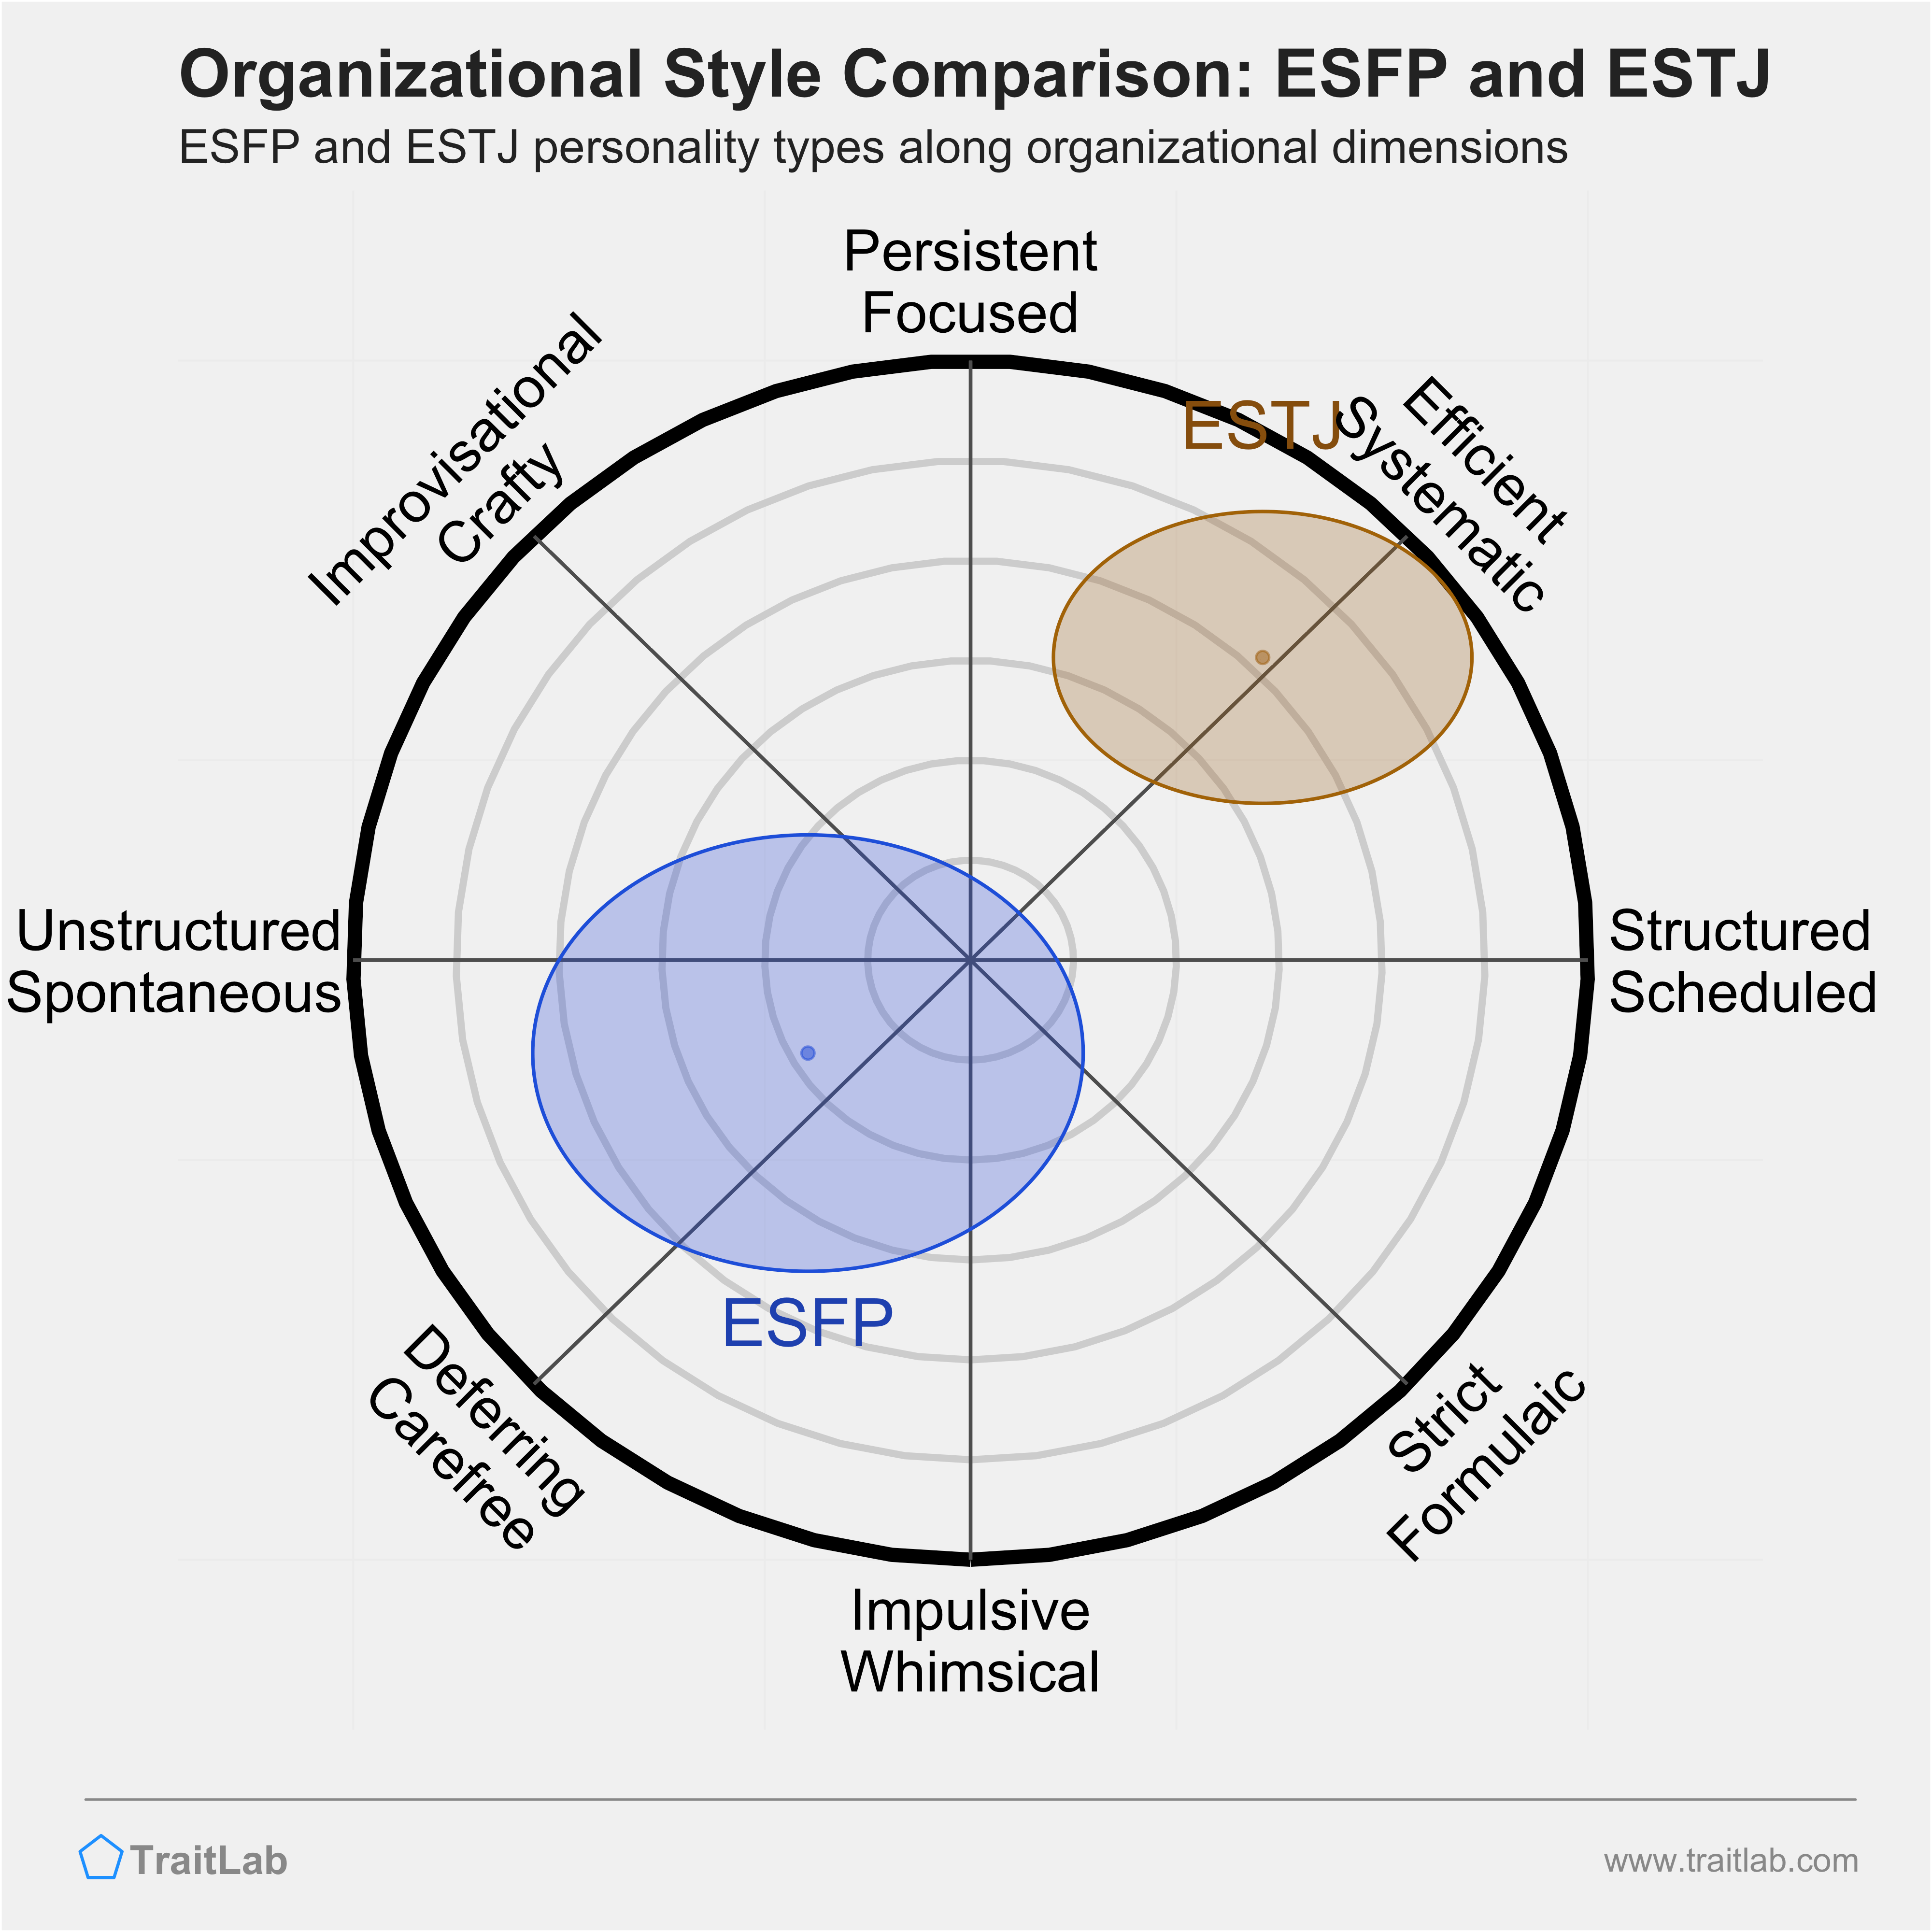 ESFP and ESTJ comparison across organizational dimensions